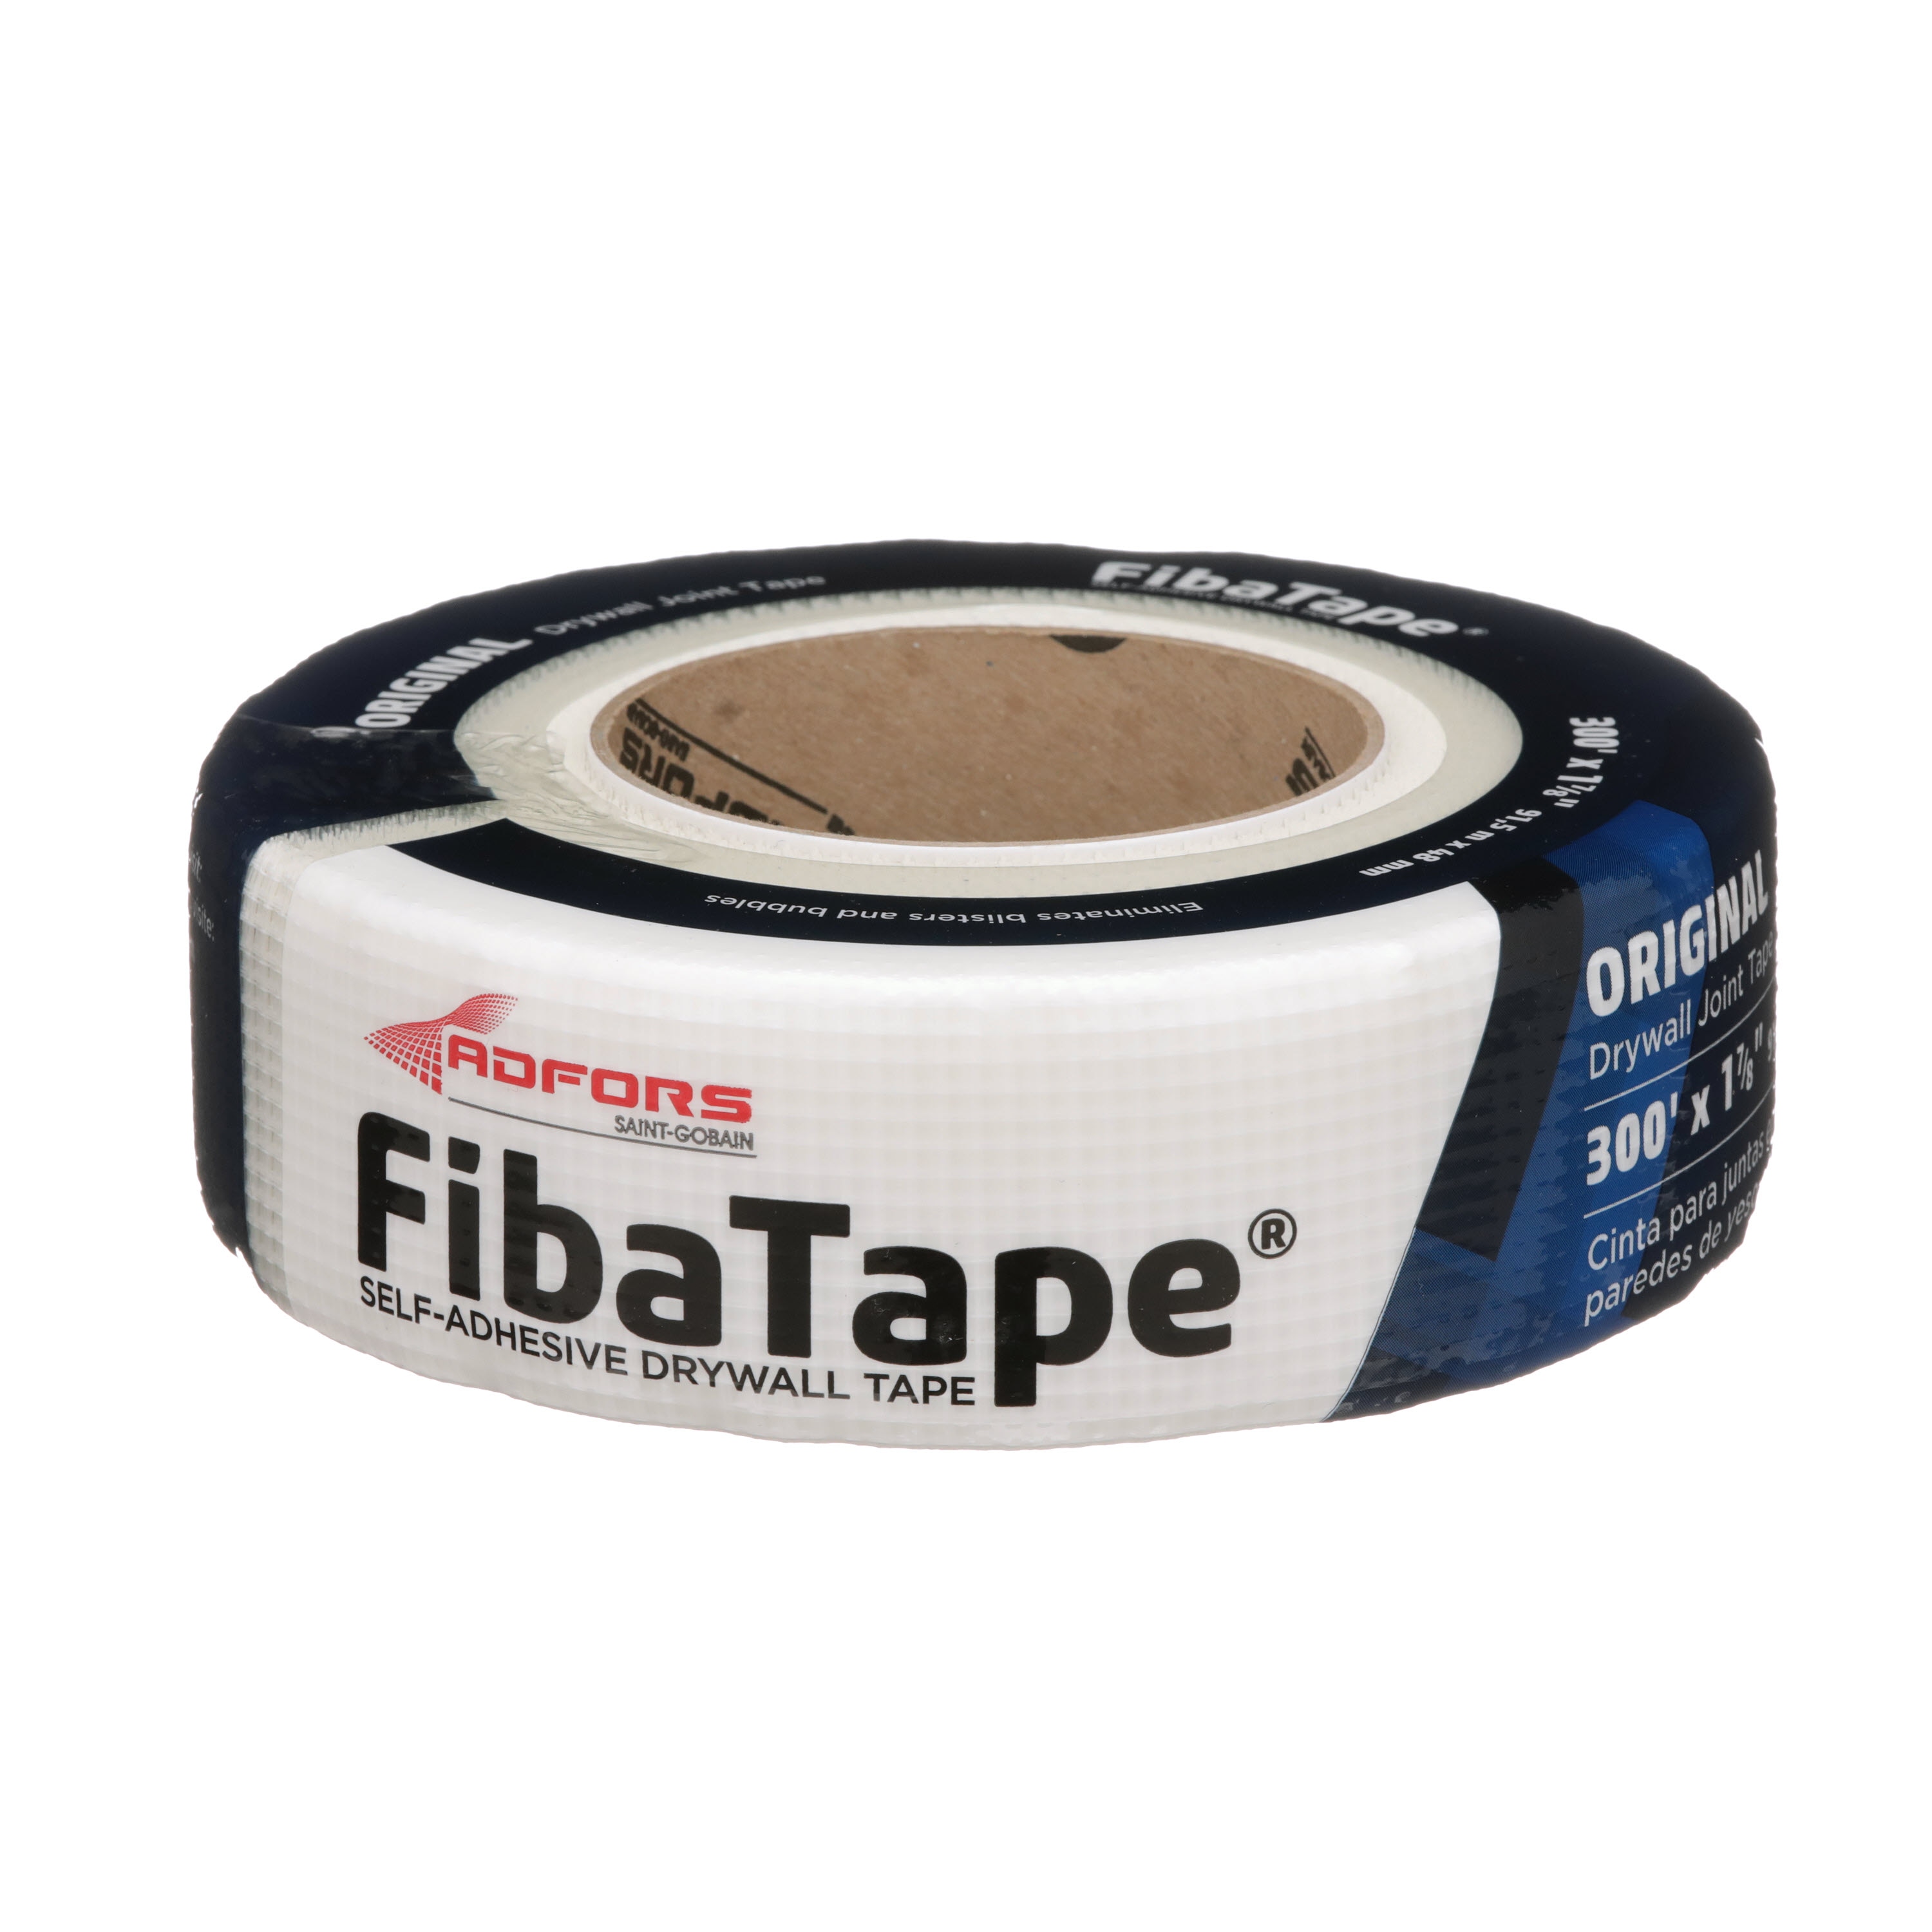 Self-adhesive 2 inch x 45 meters White Fiberglass Mesh Tape for